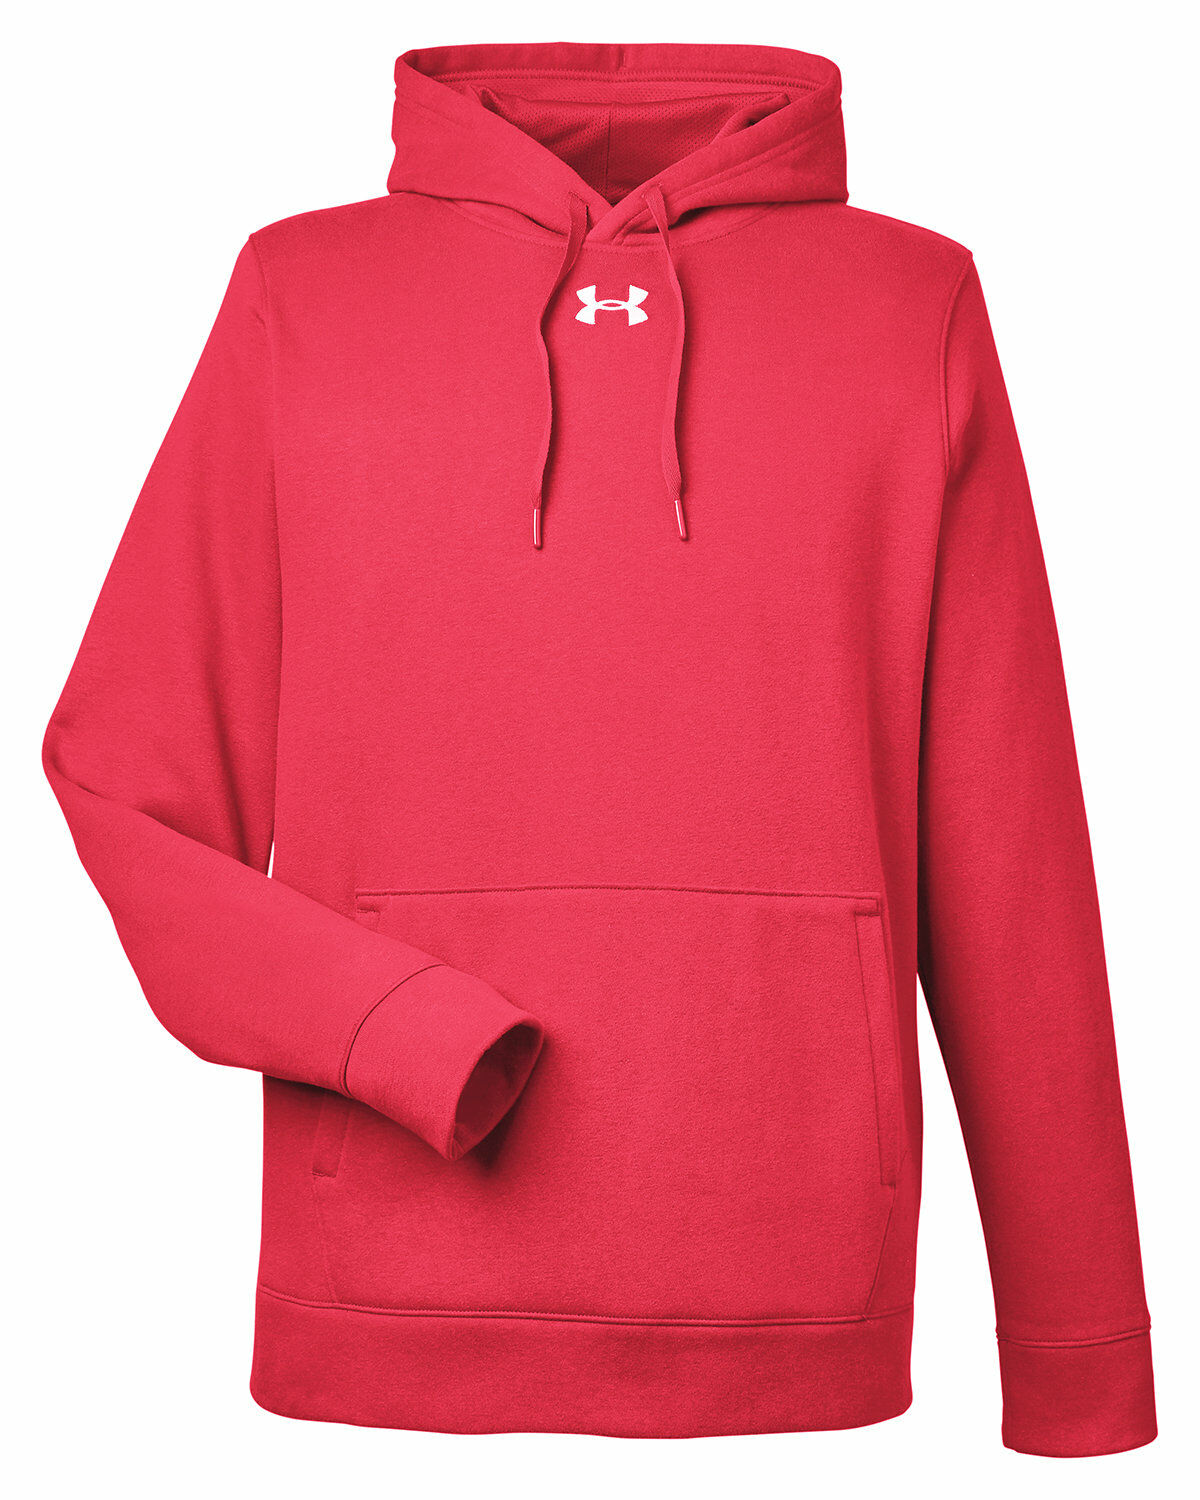 Branded Under Armour Men’s Hustle Pullover Hooded Sweatshirt Red/White